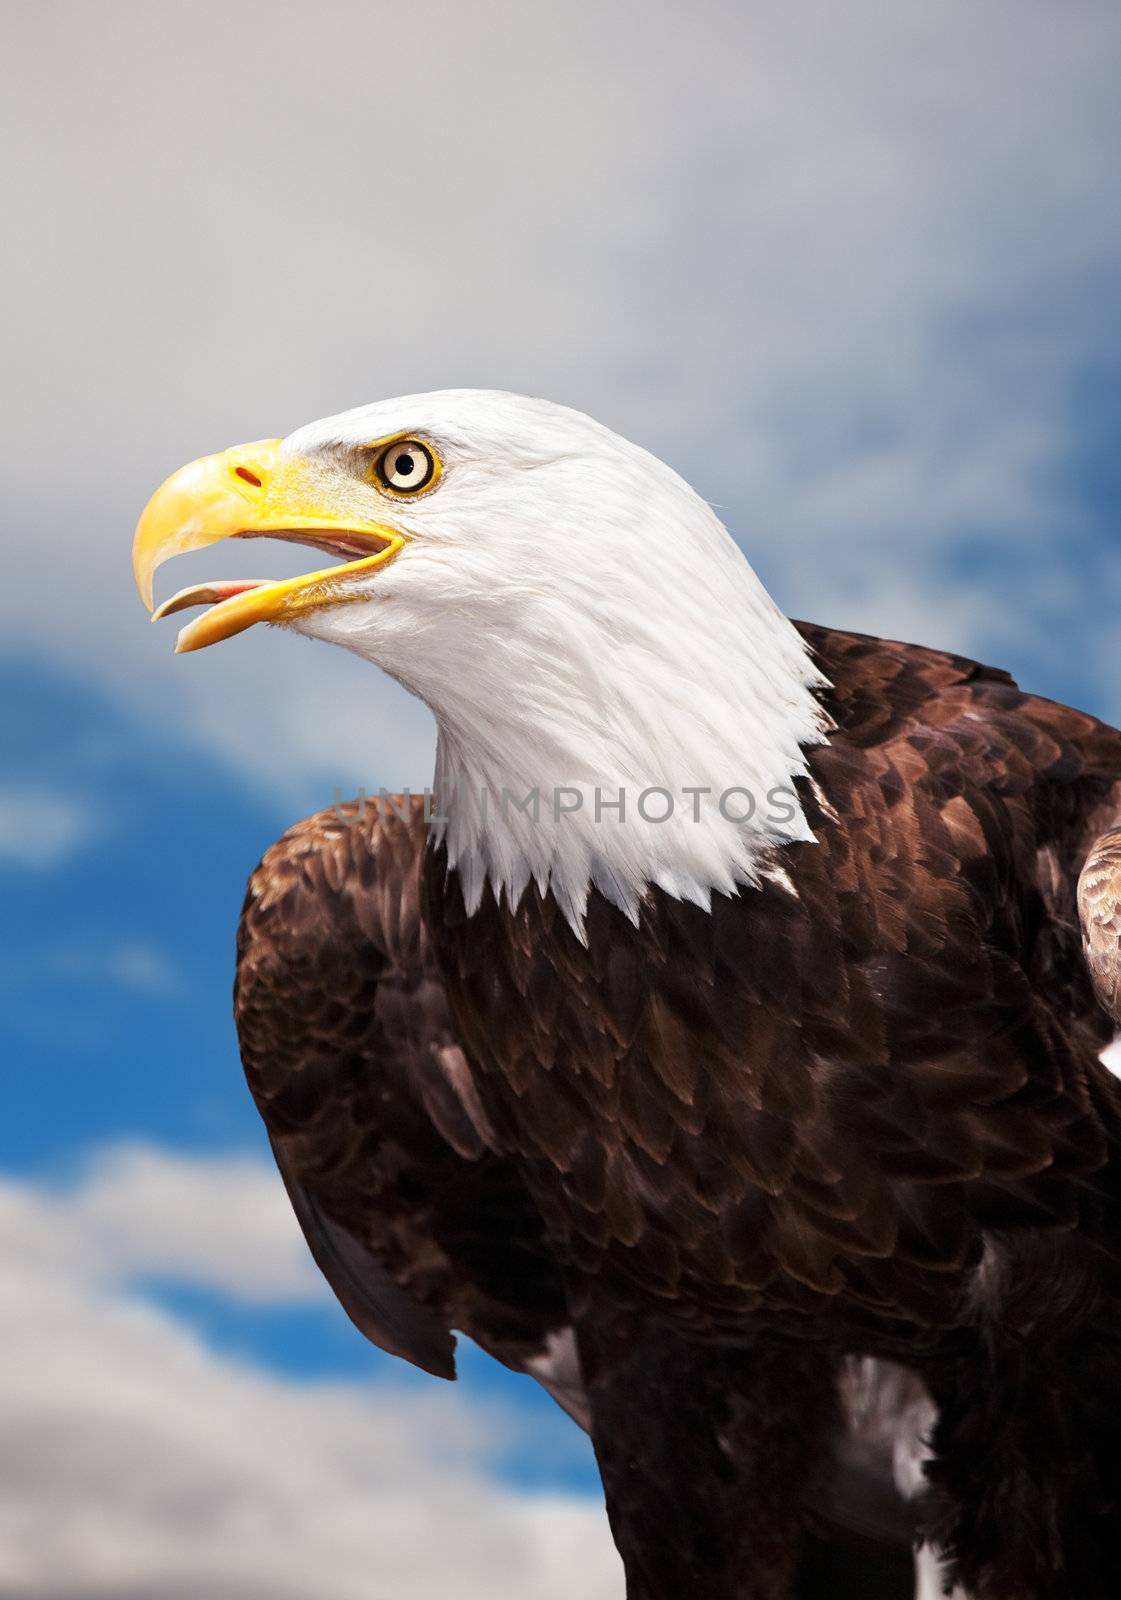 Bald Eagle by songbird839